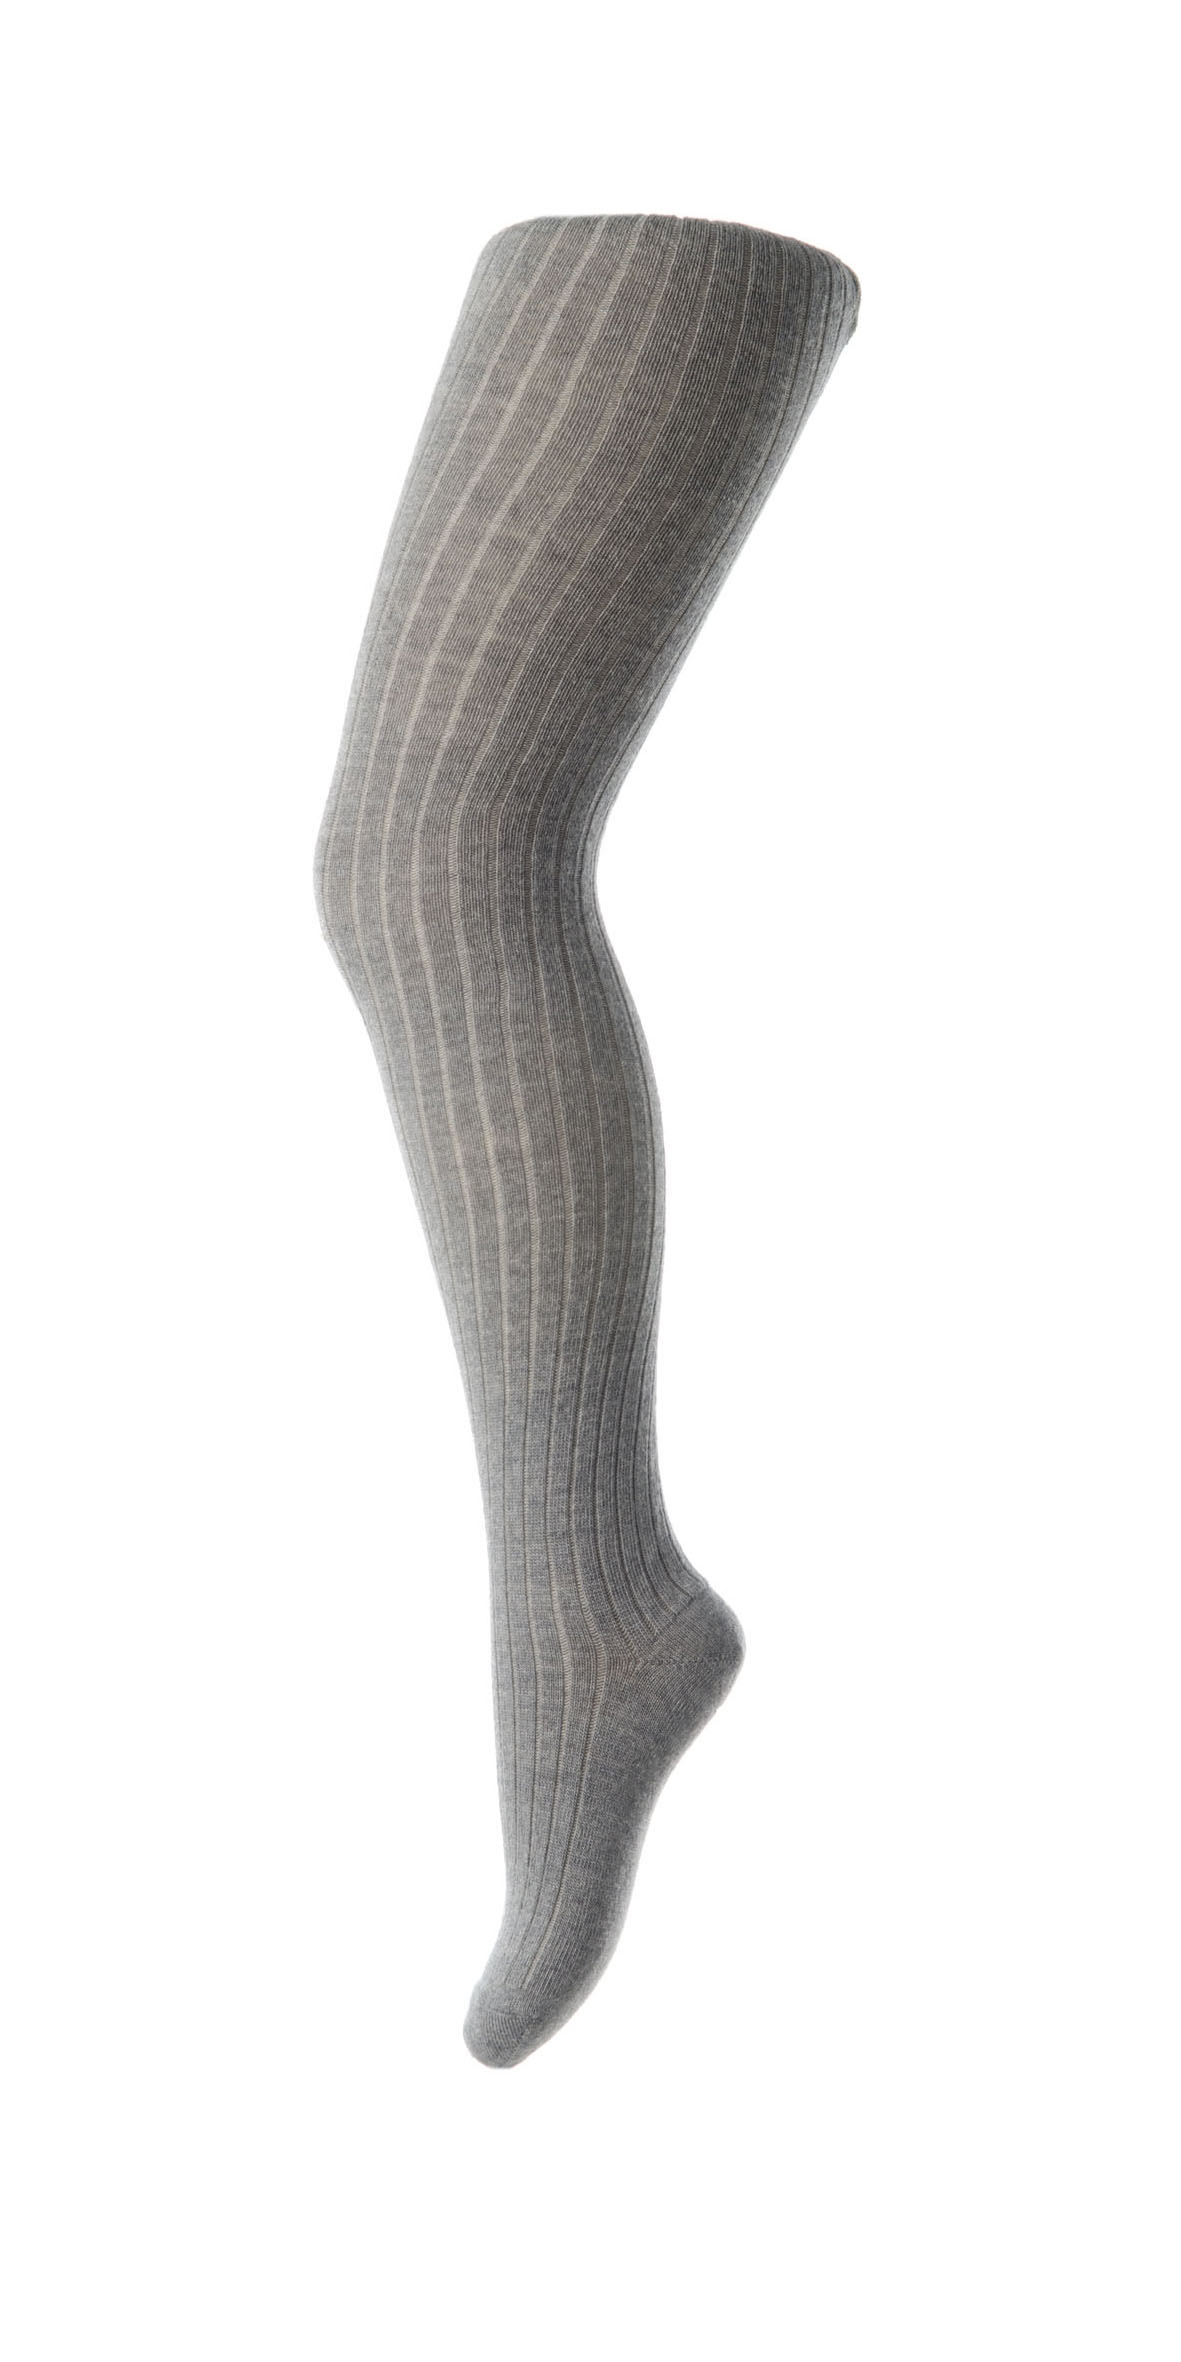  Uld Strømpebuks, Grey Marled, 70 cm